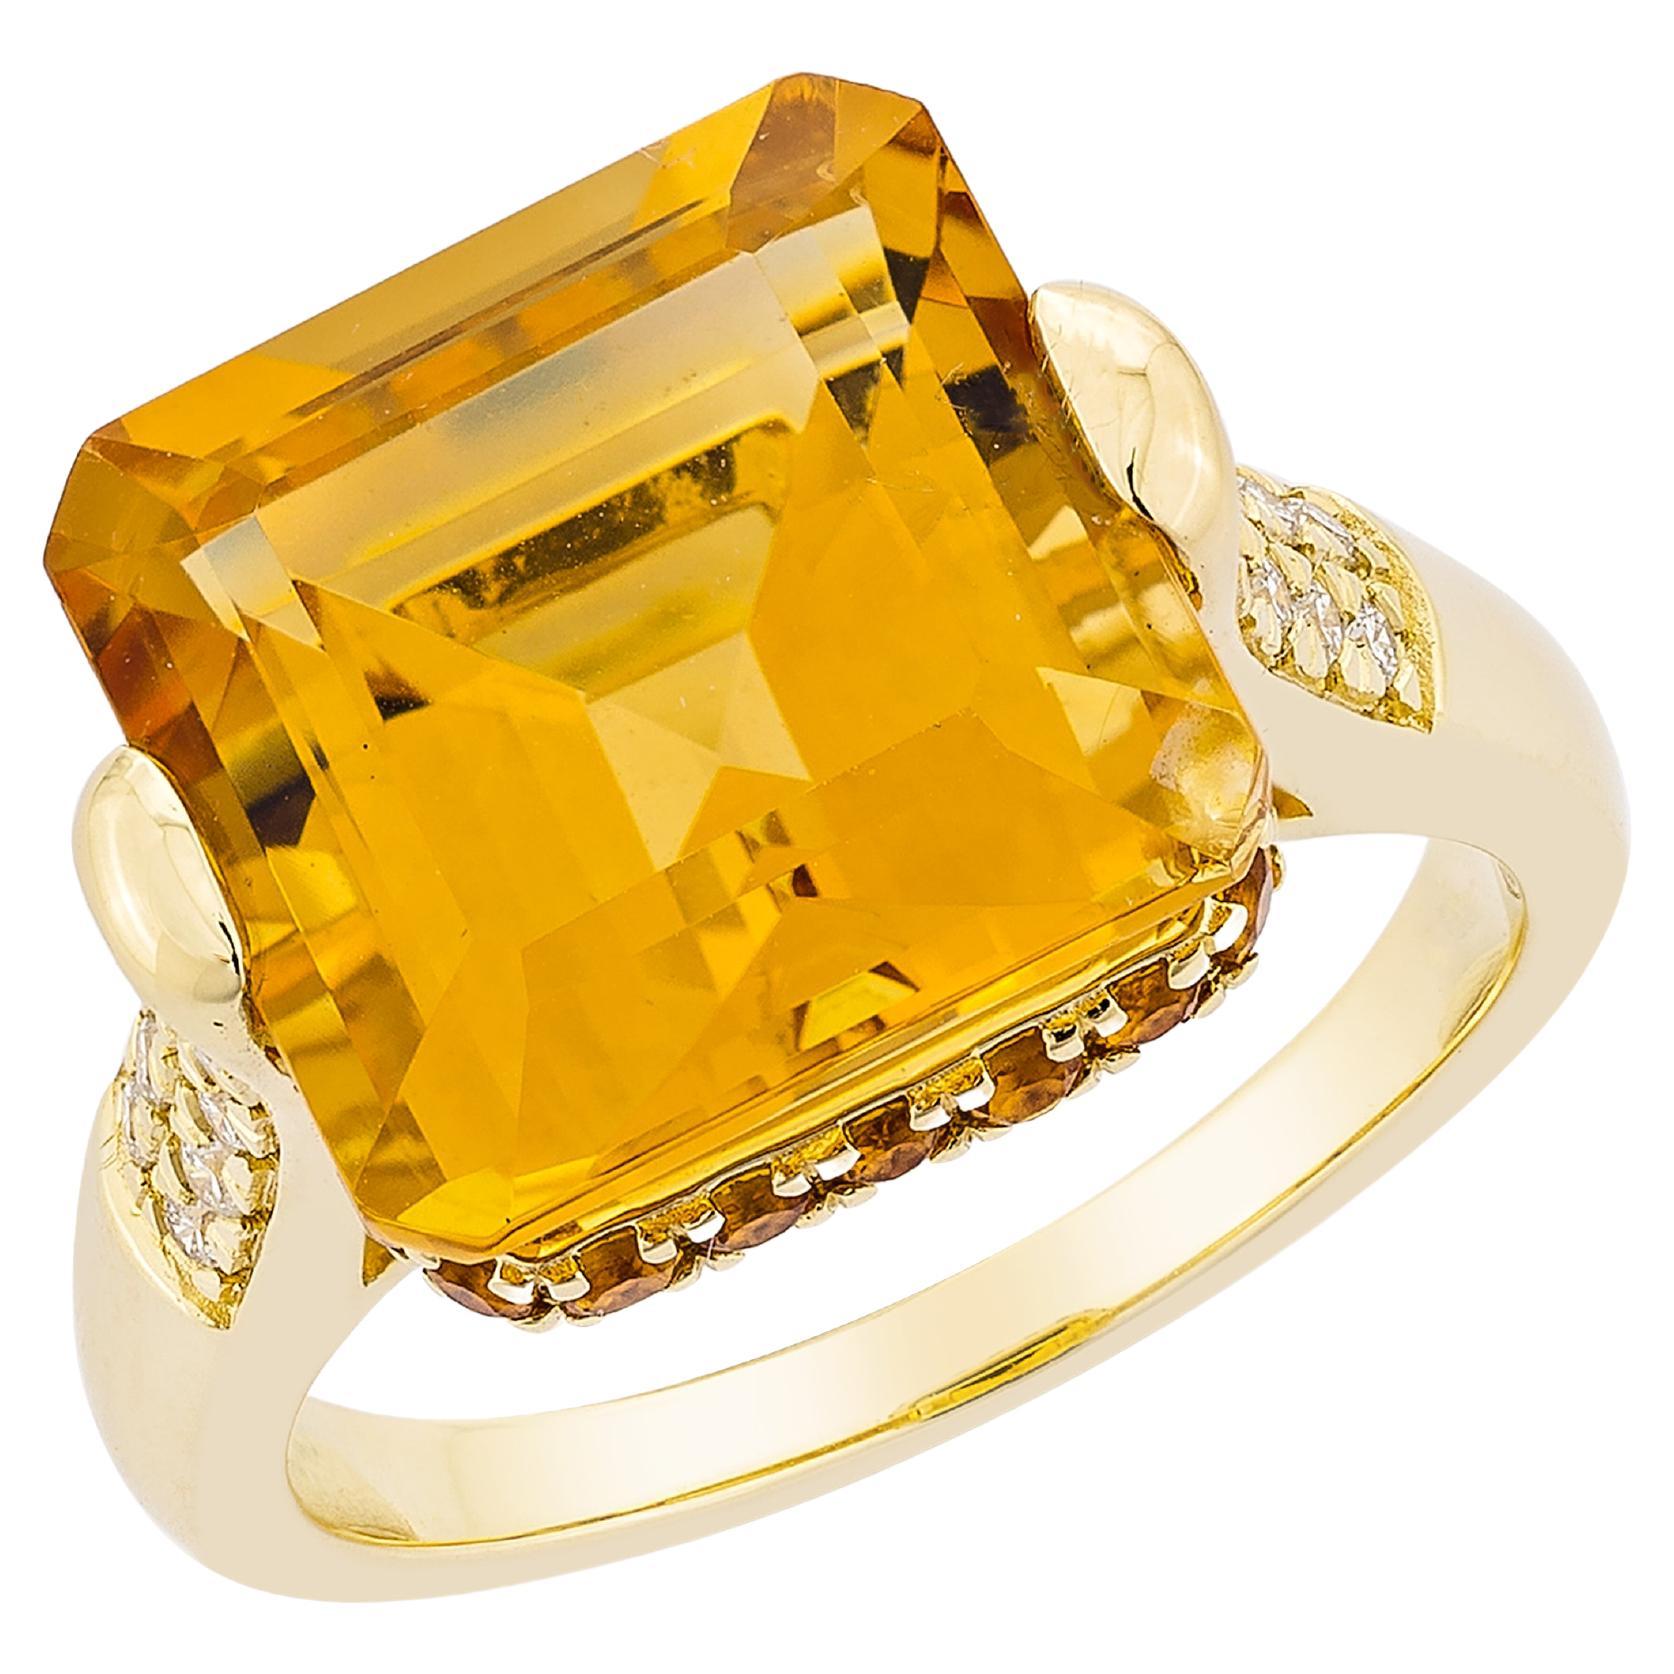 7.92 Carat Citrine Fancy Ring in 18Karat Yellow Gold with White Diamond.  